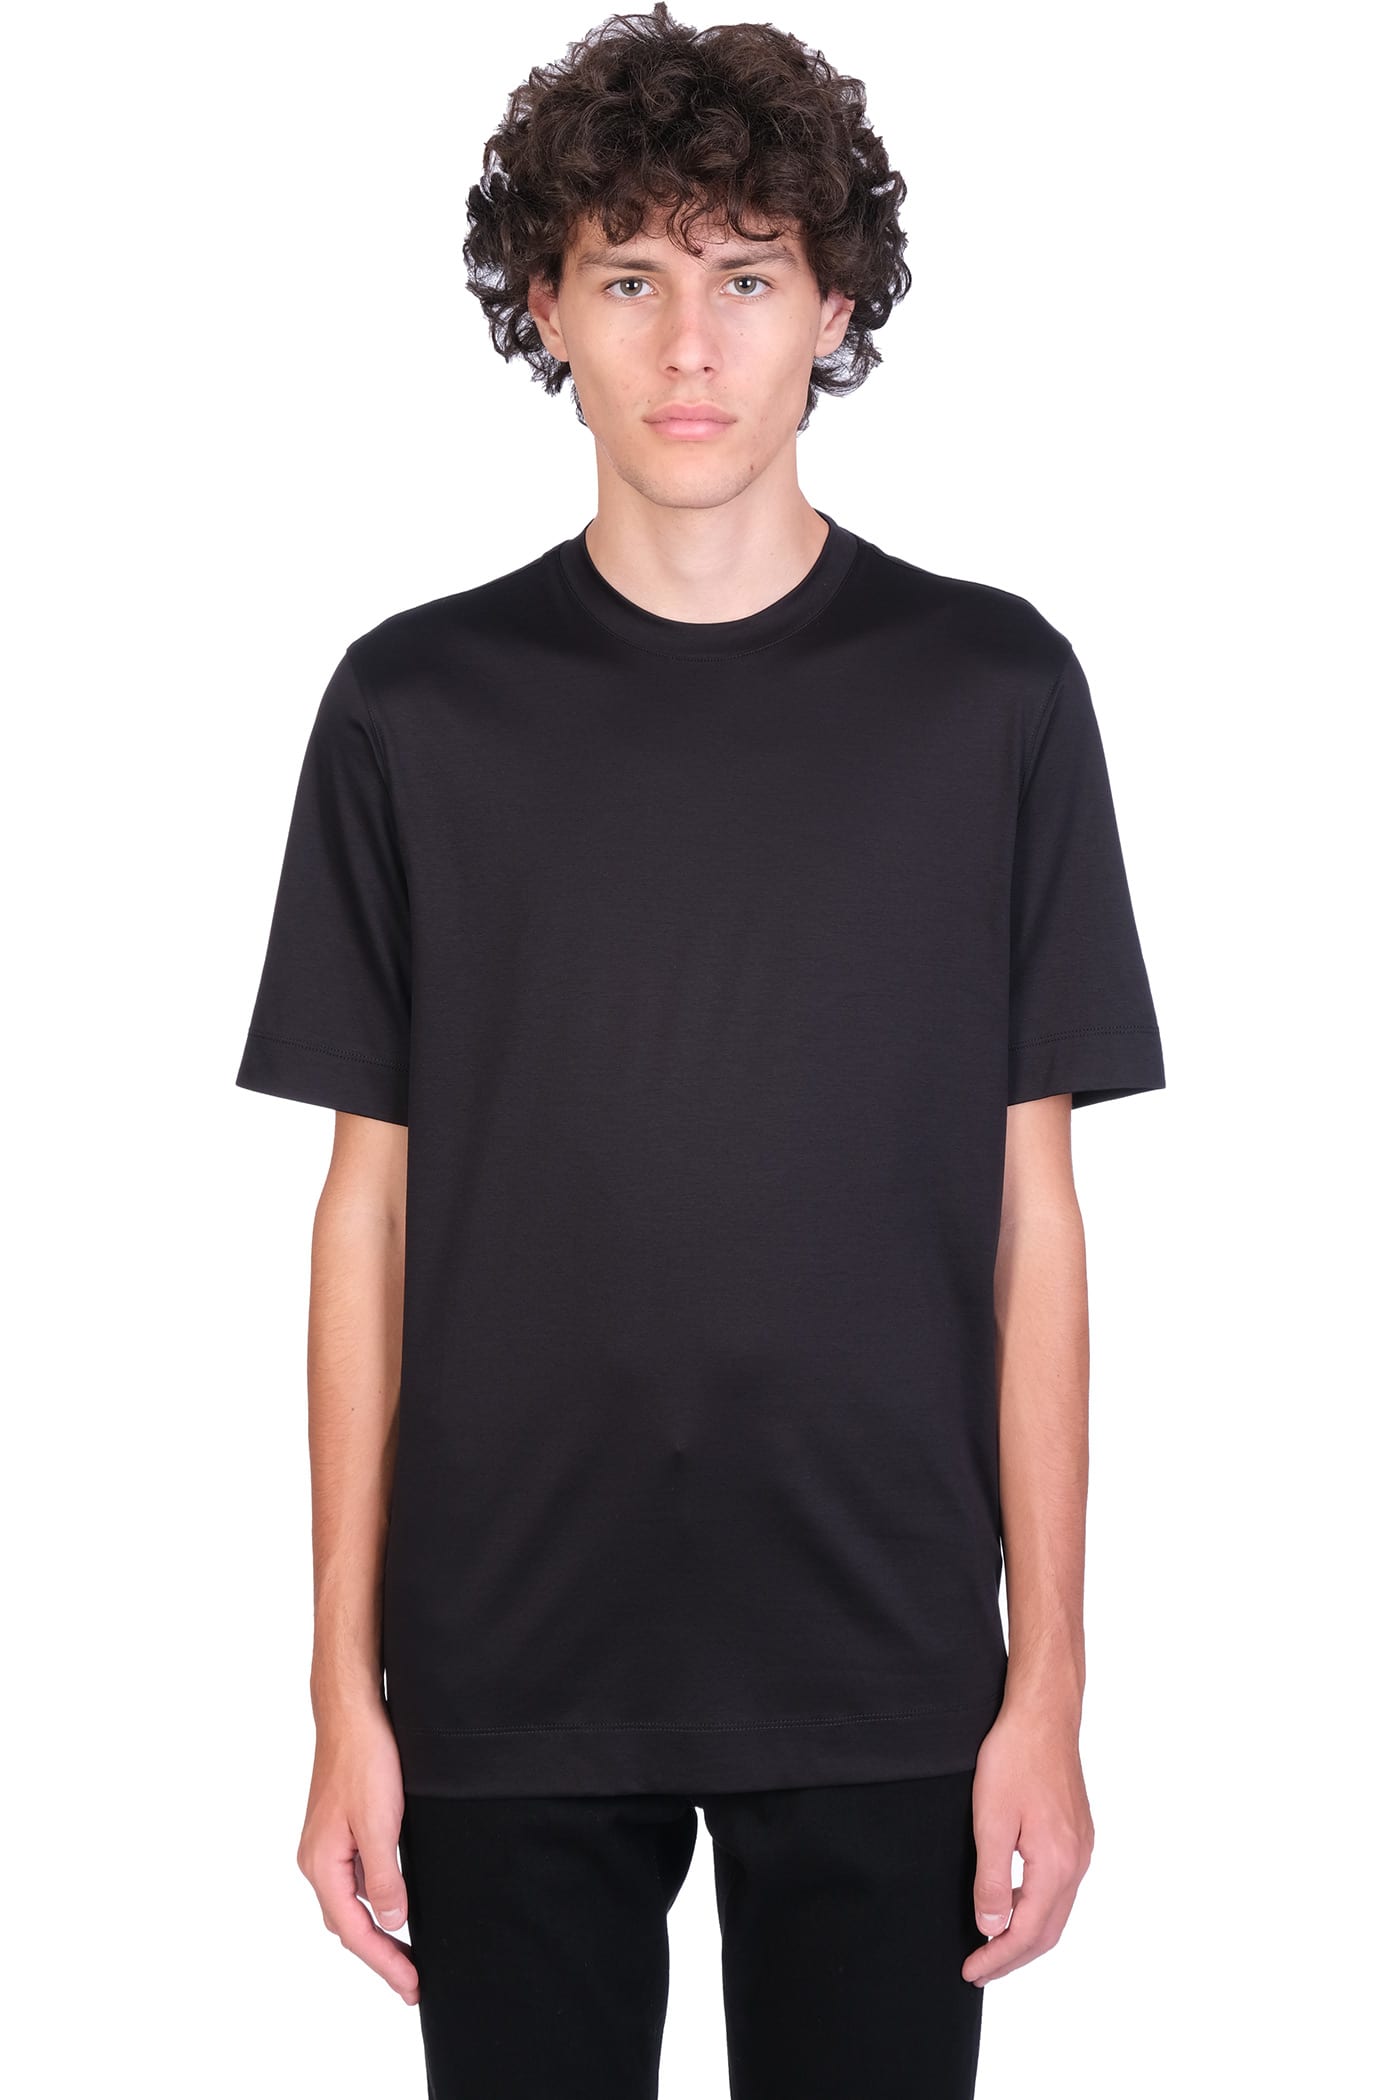 Z Zegna T-shirt In Black Cotton